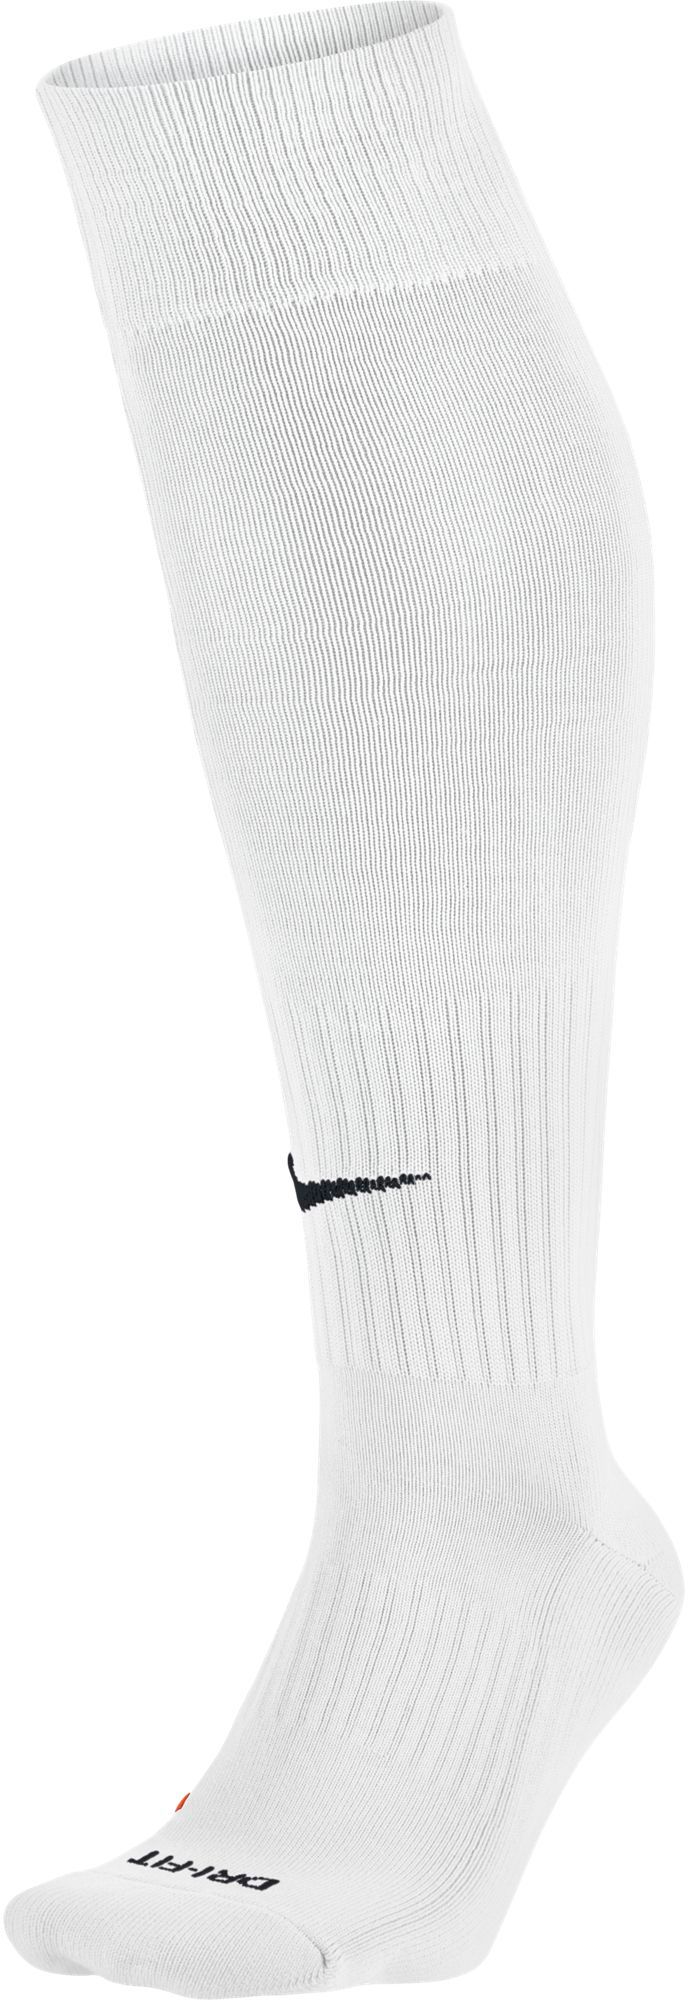 Nike Classic Soccer Socks - image 1 of 6